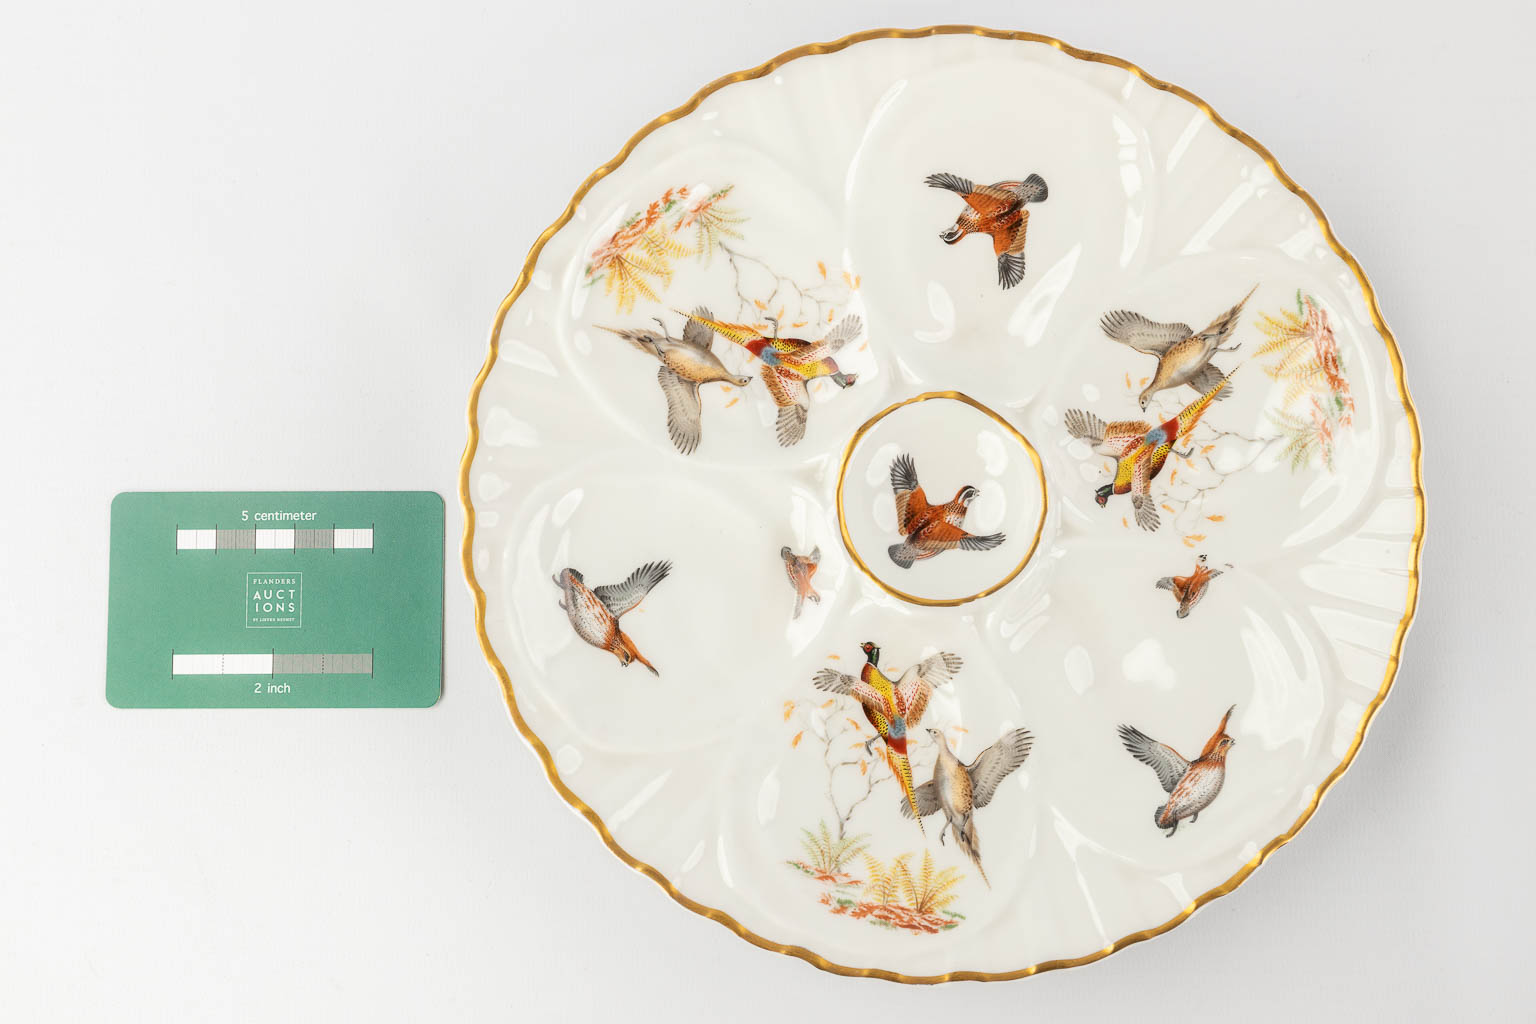 Porcelaine De Paris, France, a collection of 12 oyster plates decorated with birds. 20th C. (D: 23 cm)